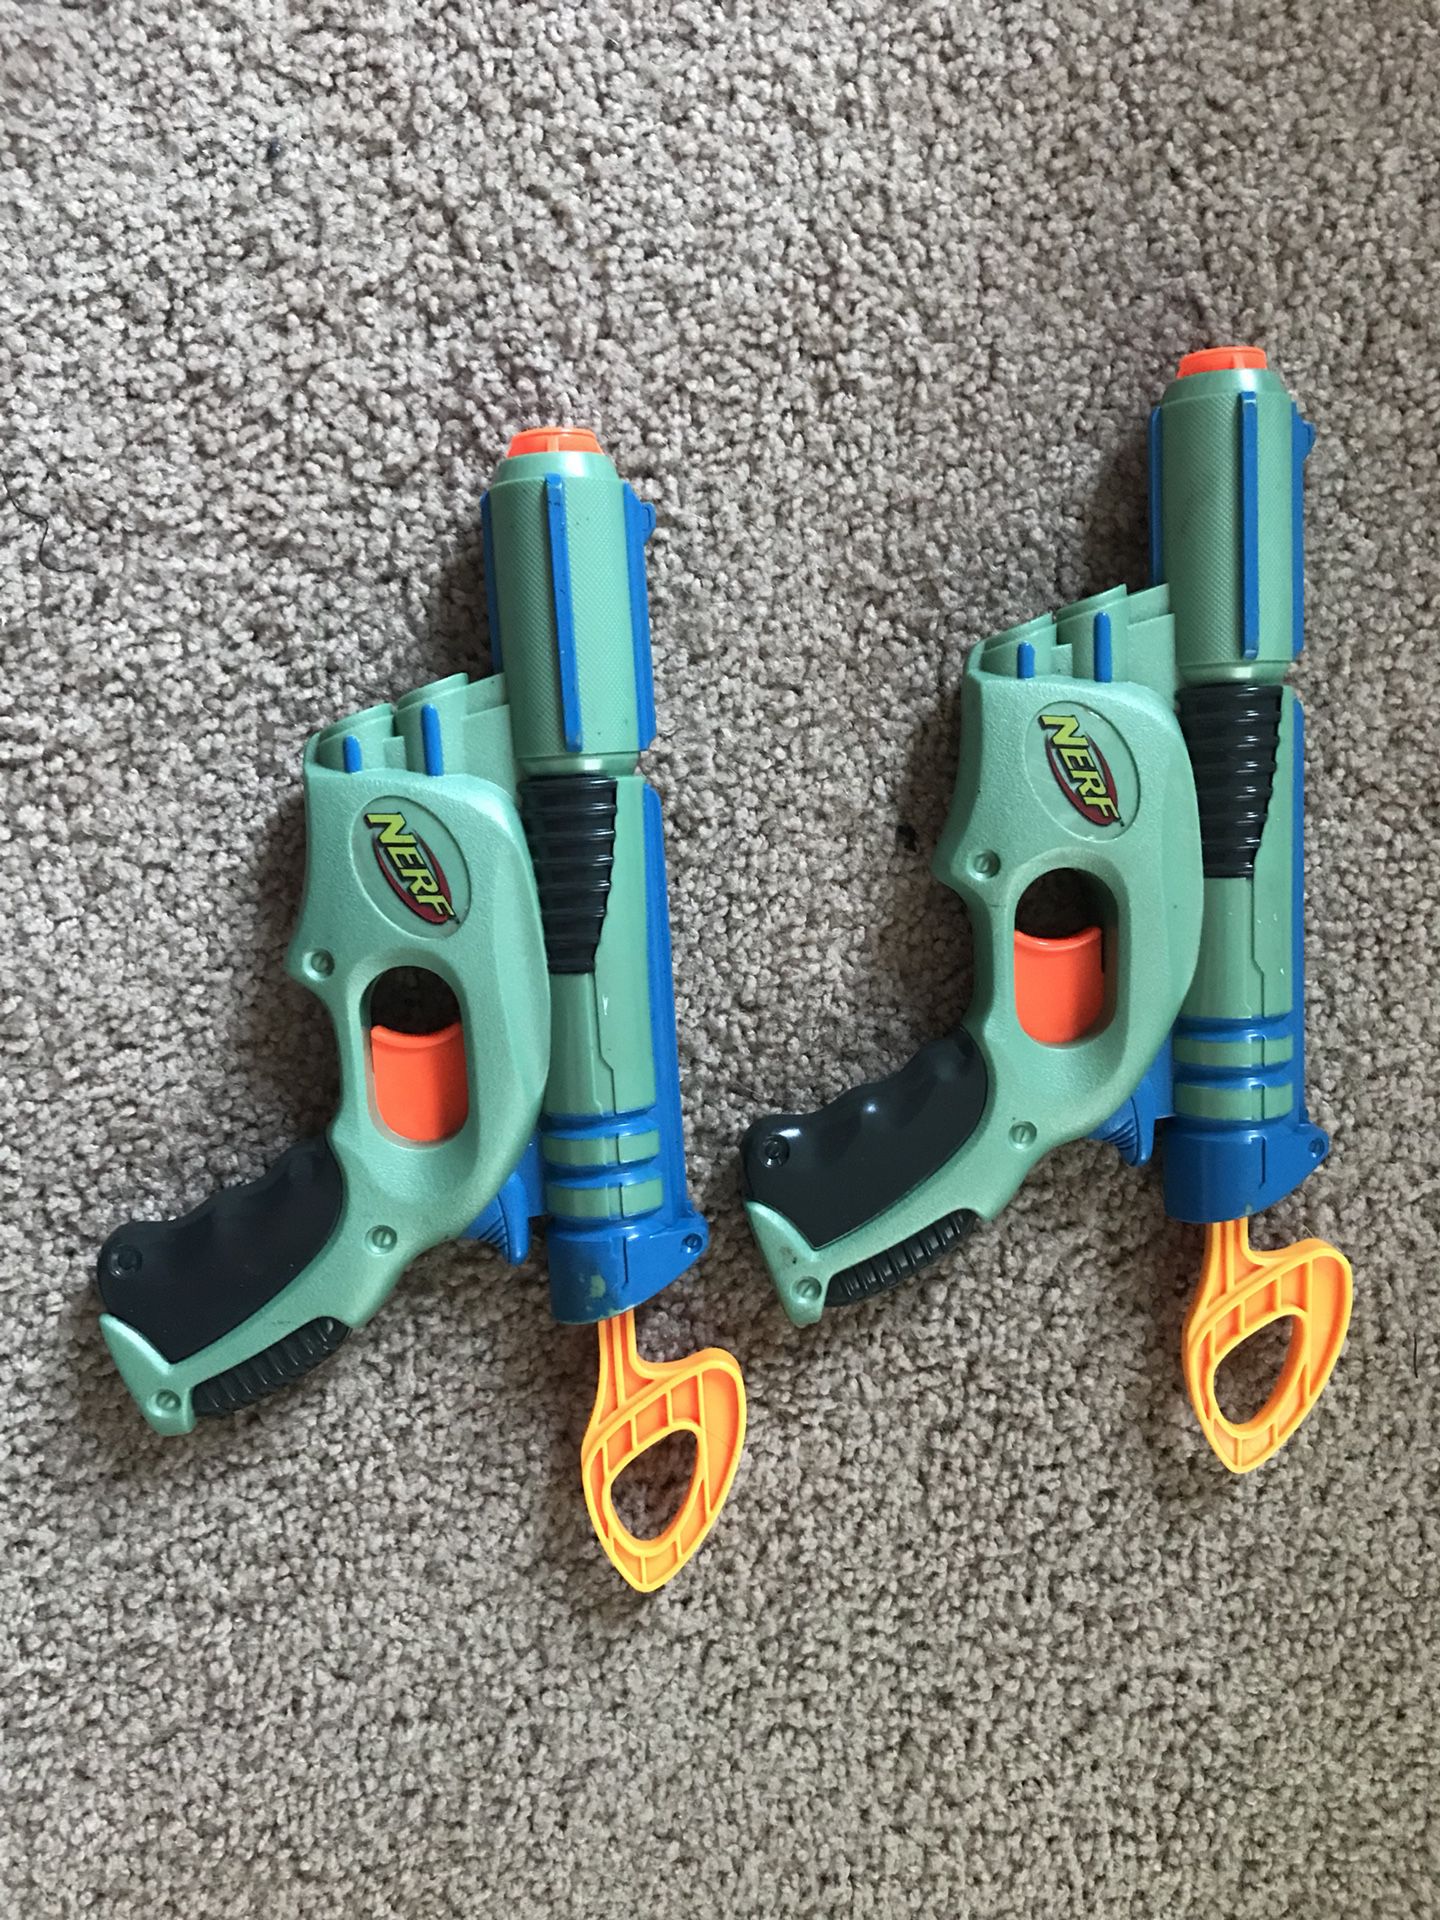 Two Nerf guns